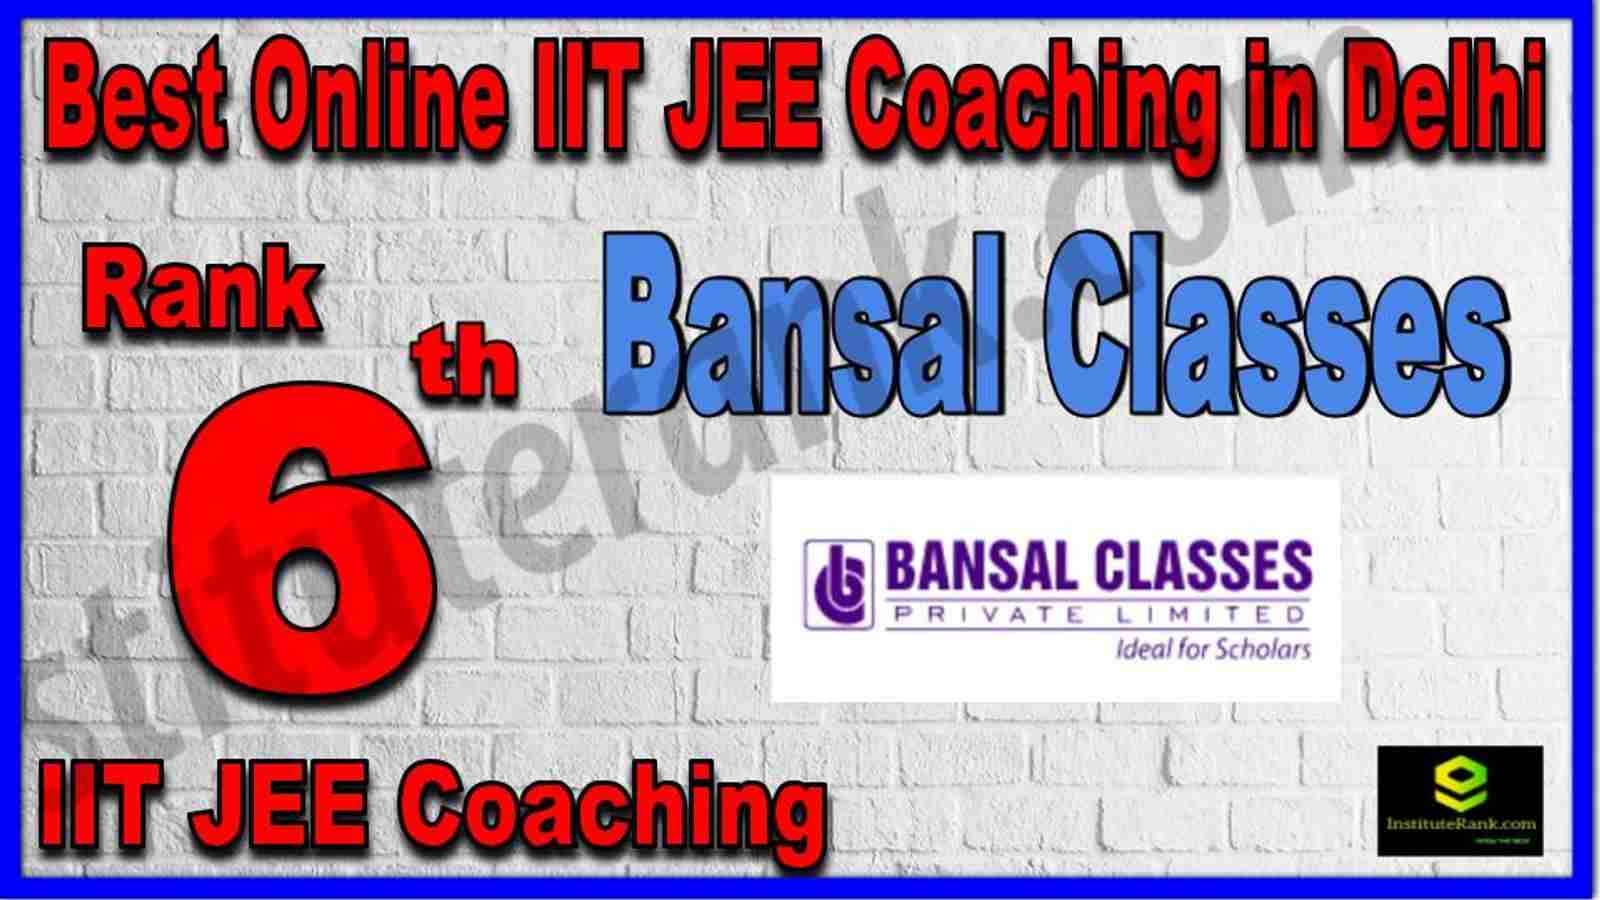 Rank 6th Best Online IIT JEE Coaching in Delhi